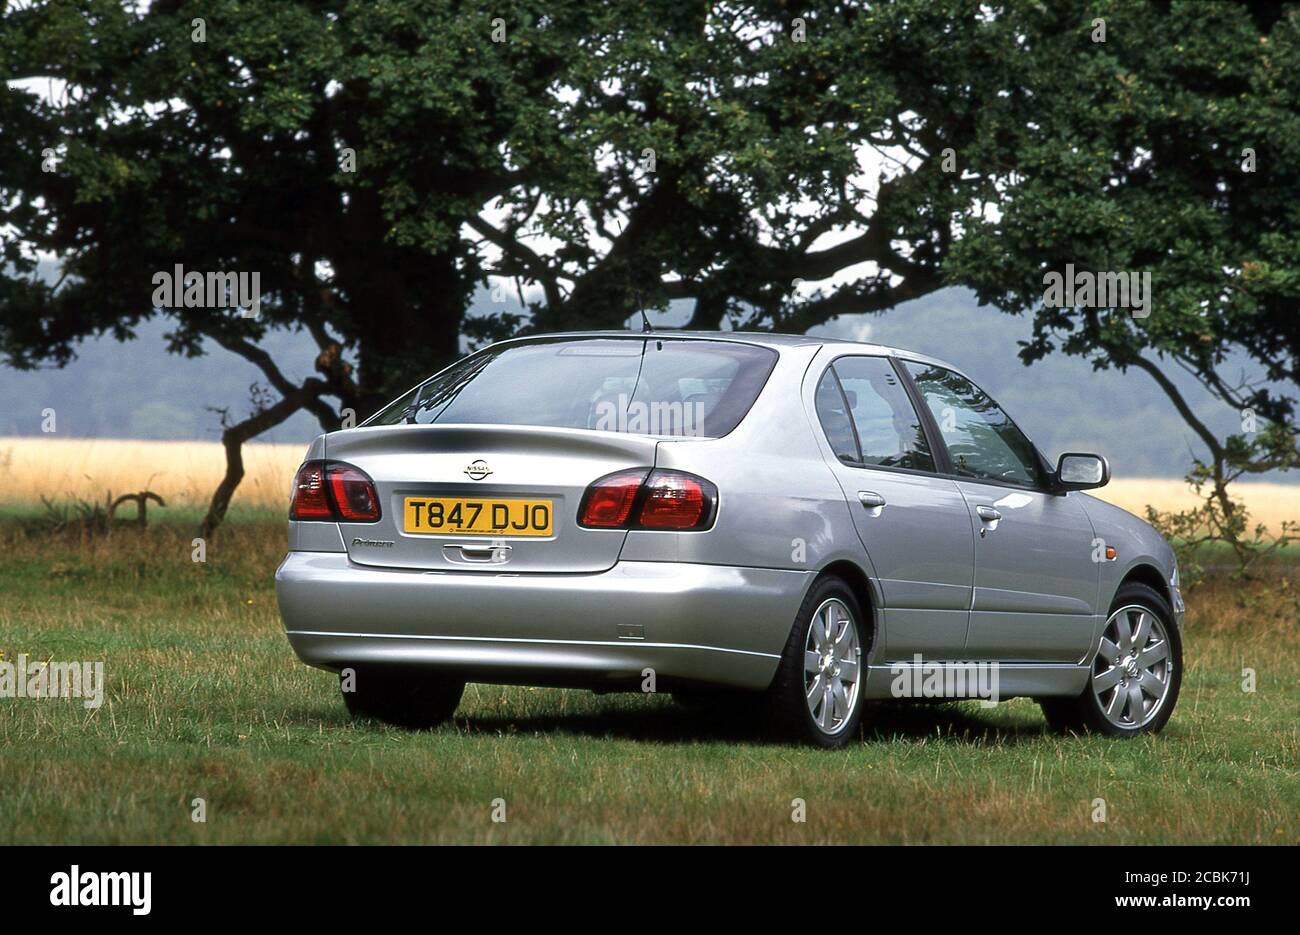 1999 Nissan Primera Stock Photo